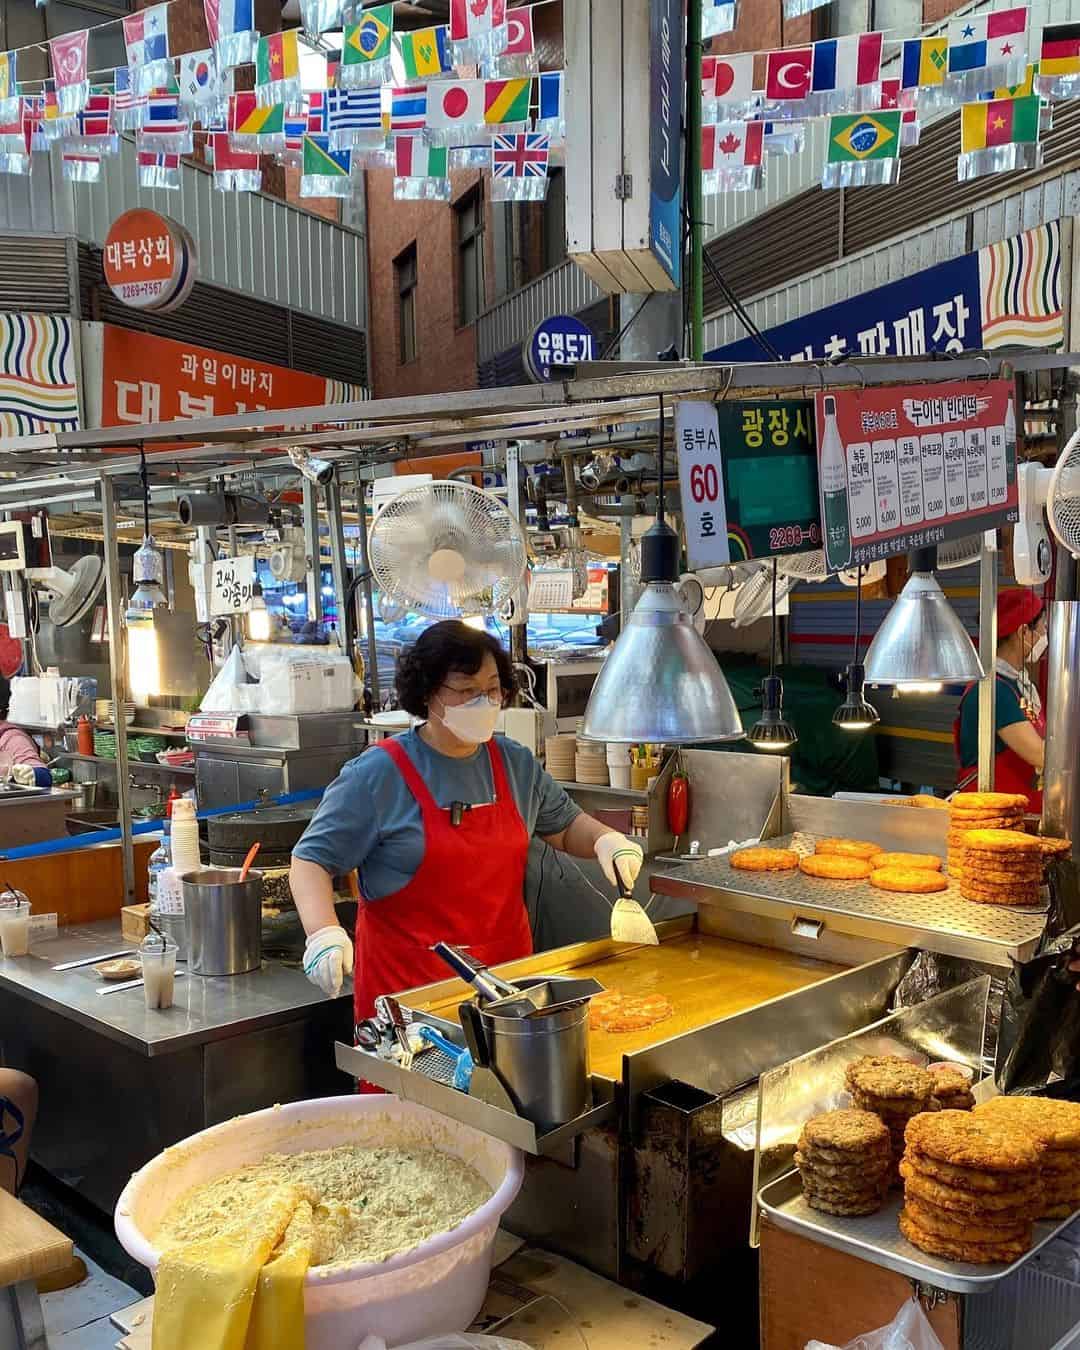 Things to try at Gwangjang Market Seoul: Bindaetteok